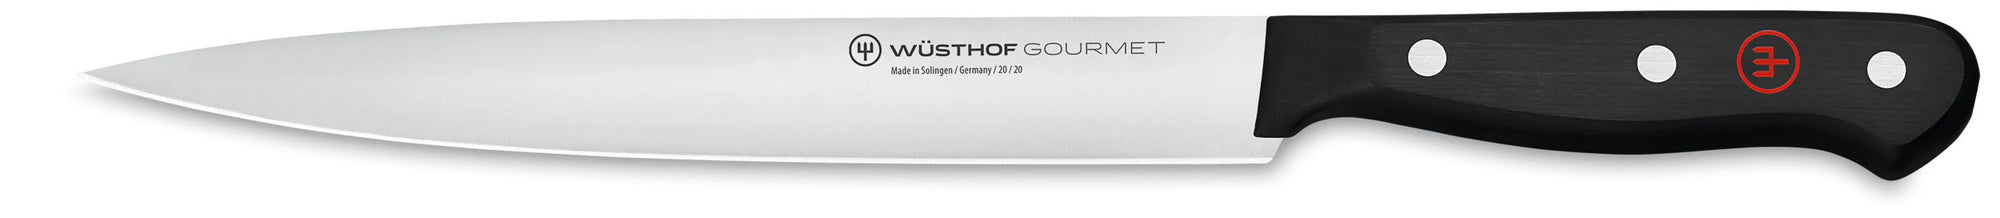 Wusthof Gourmet Carving Knife, 8" (20cm) - 4114-20